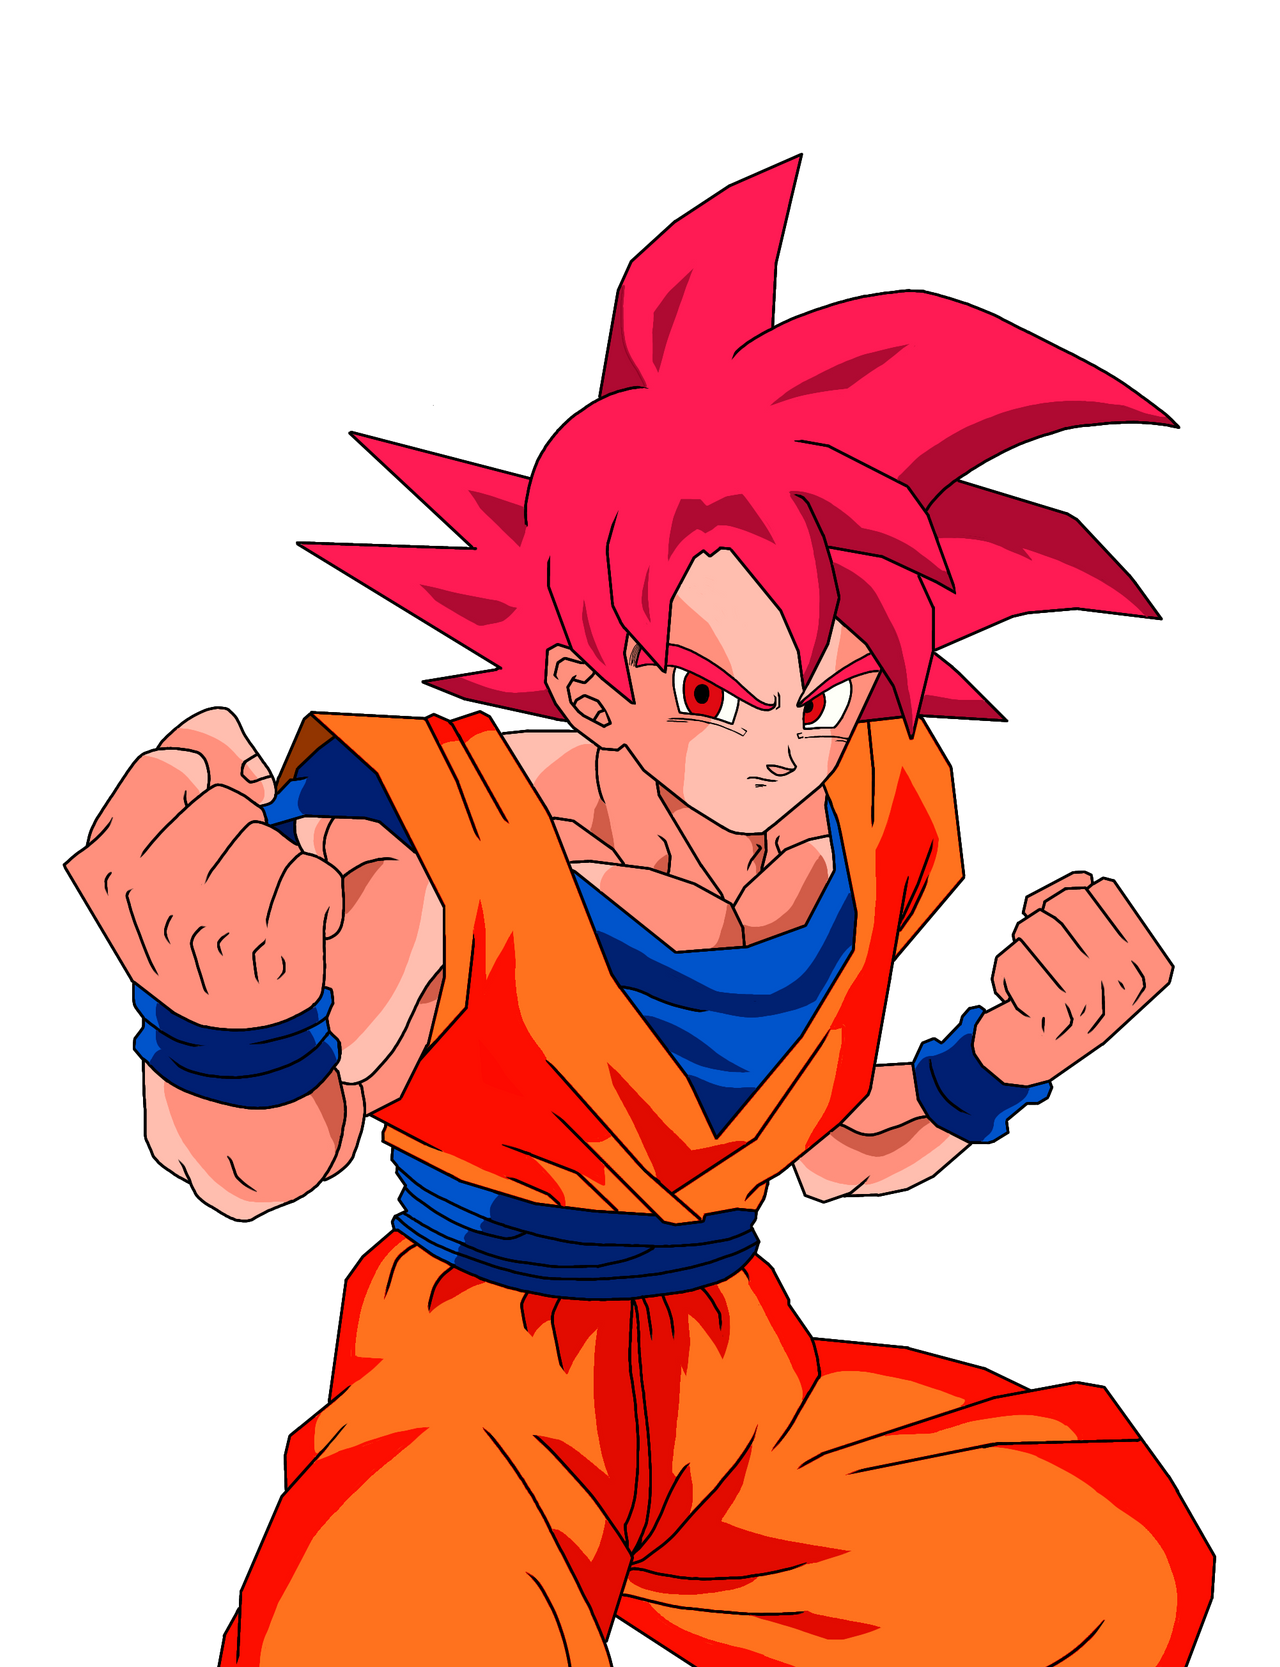 Goku Super Saiyan God DBZ BT3 Style by MonkeyT800 on DeviantArt